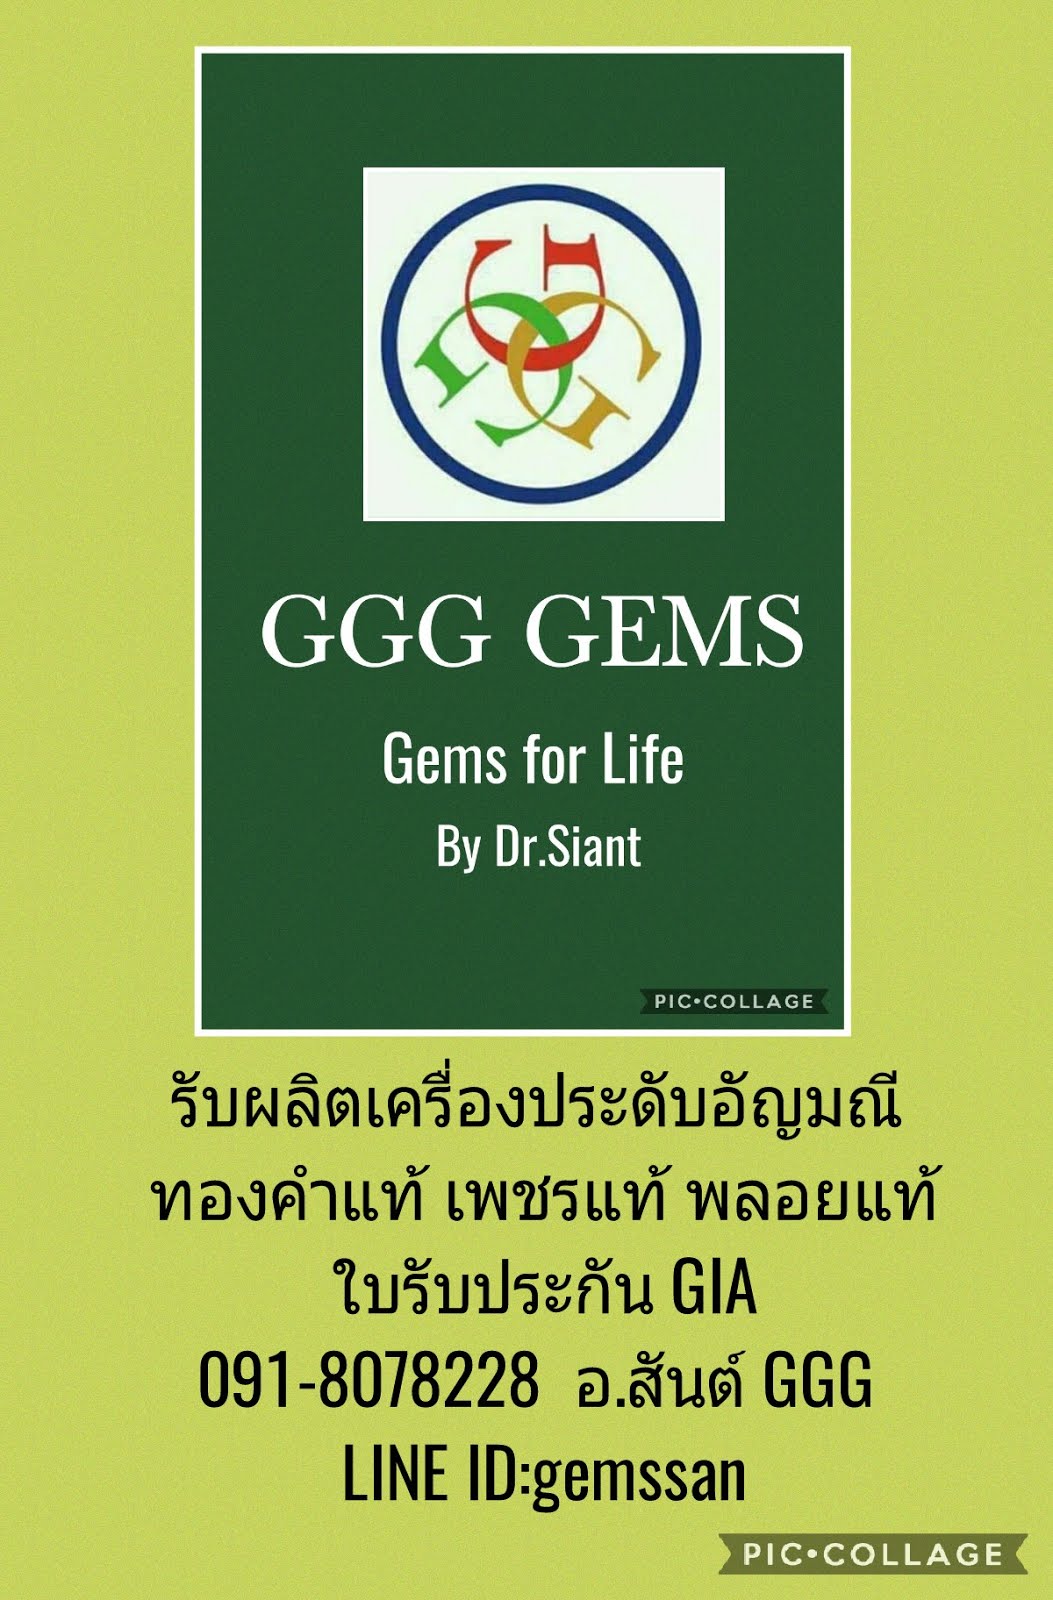 GGG Gems